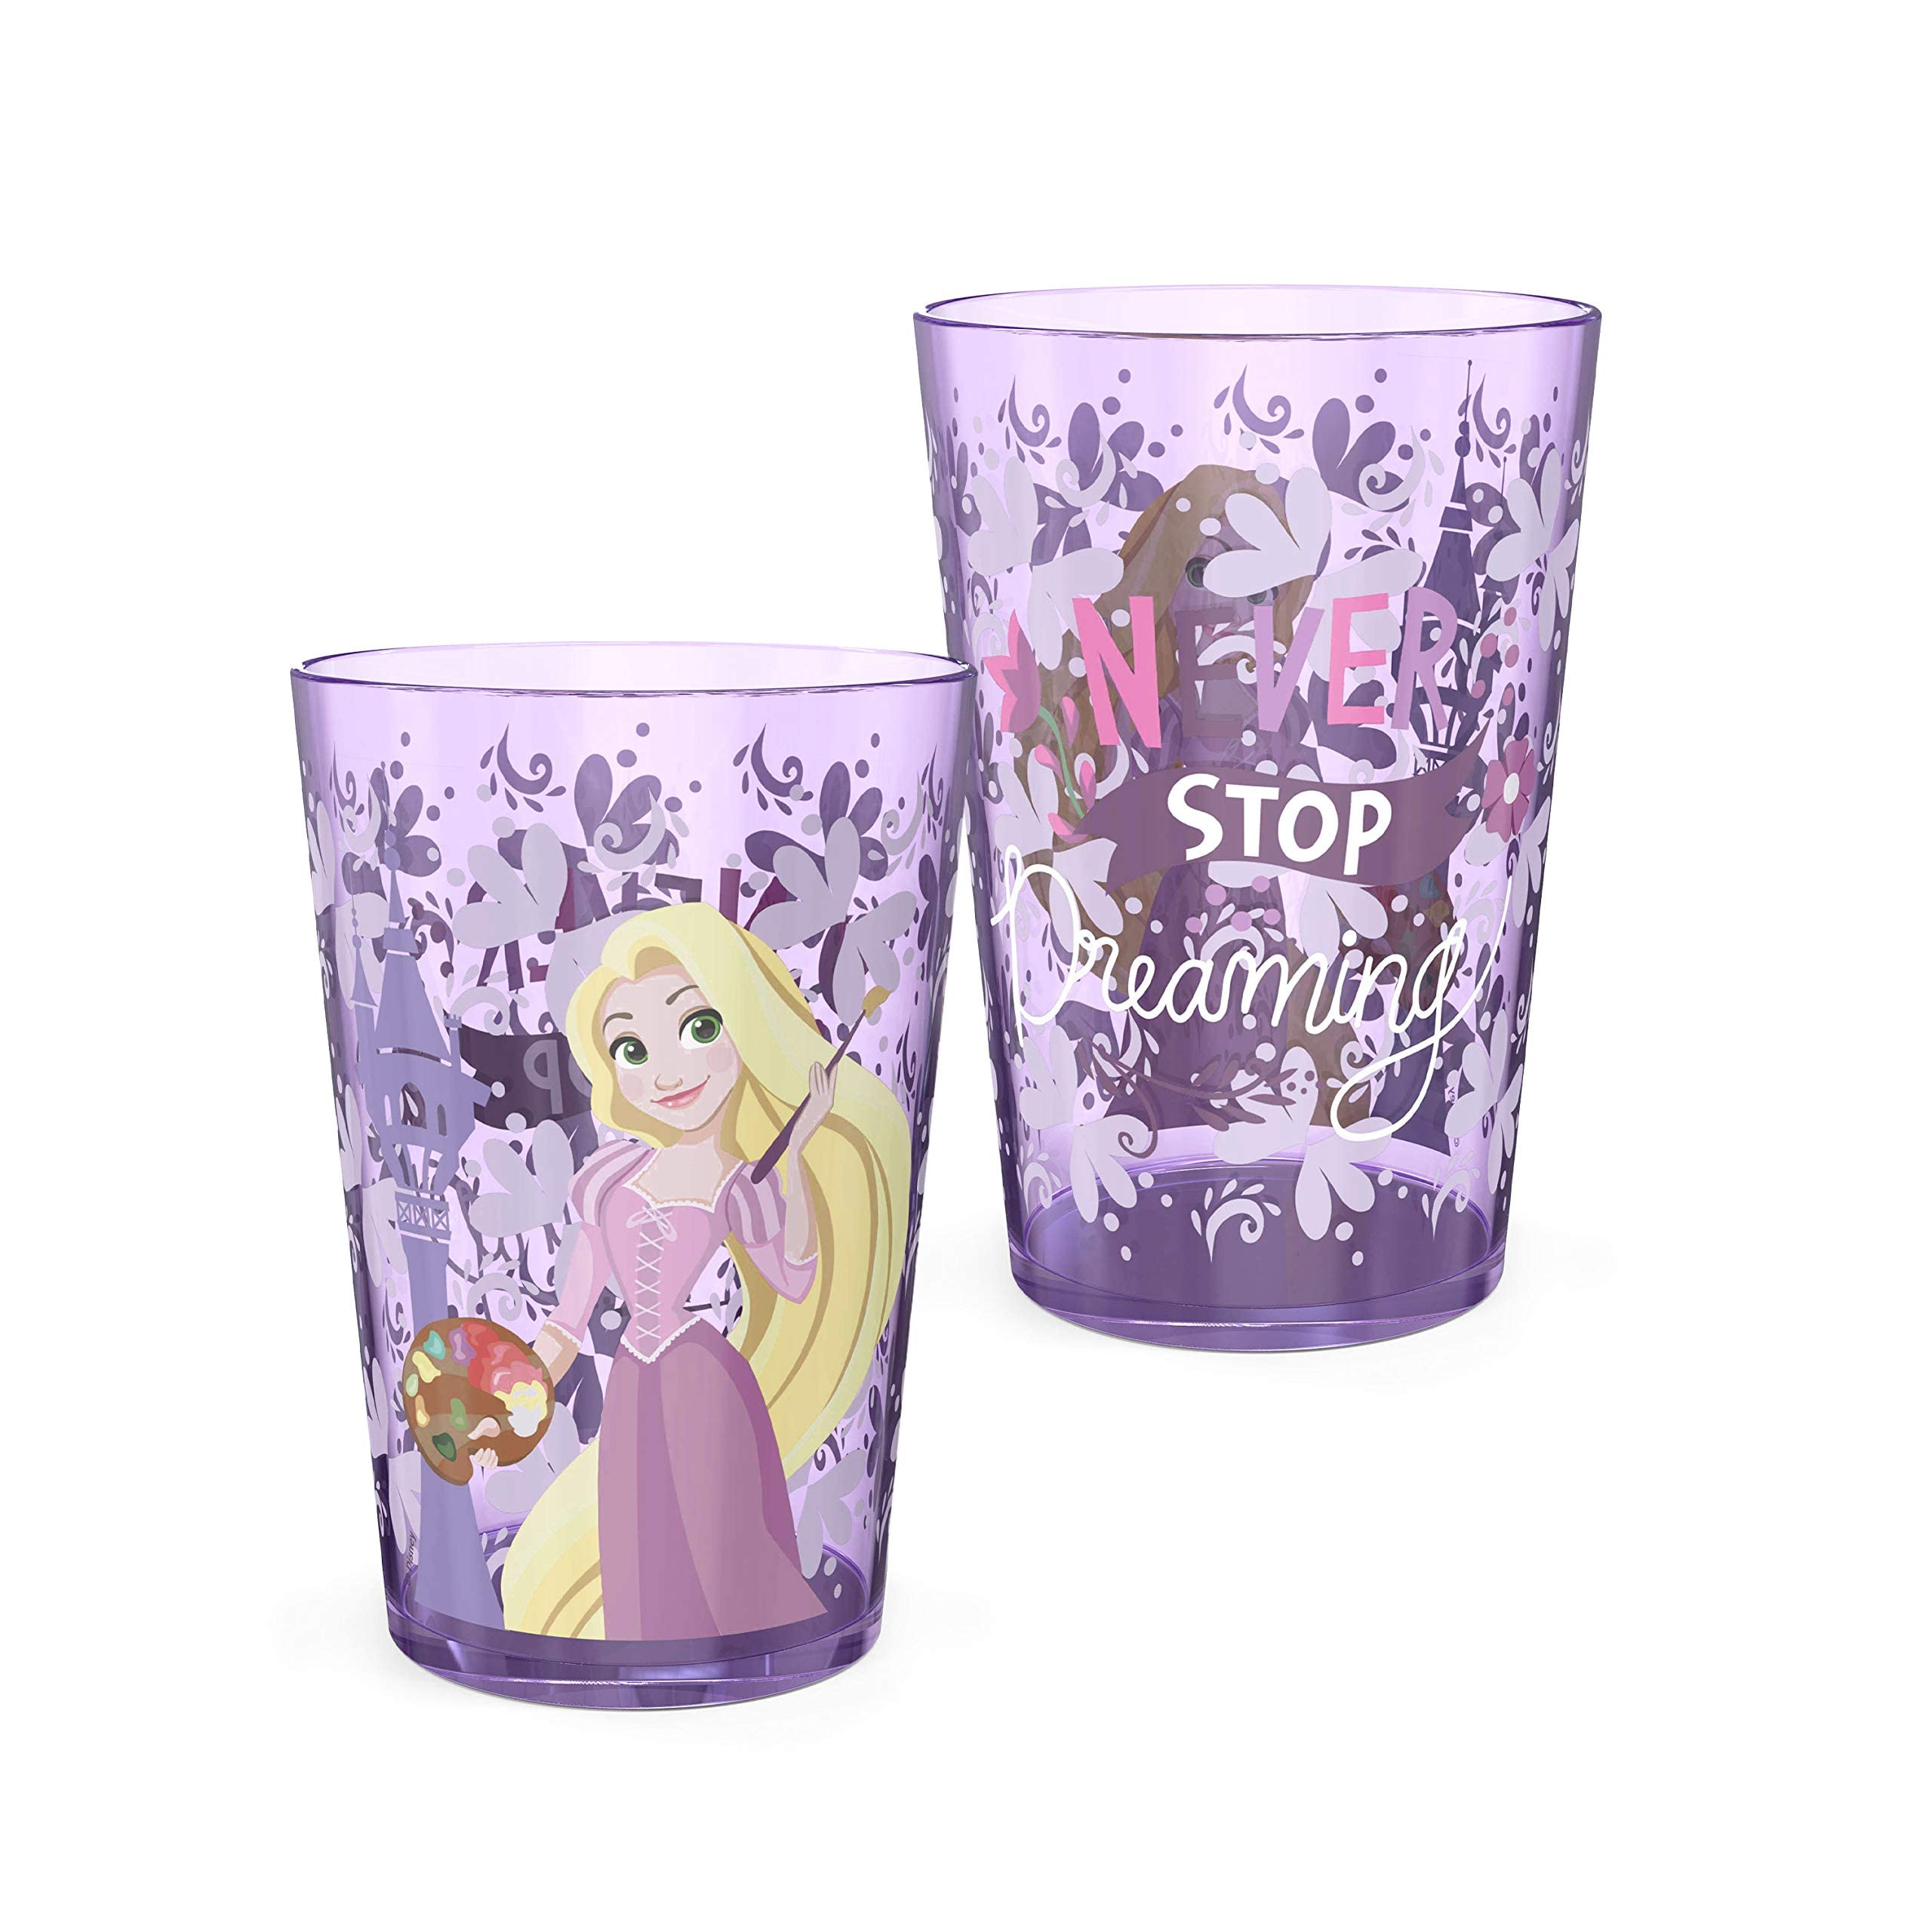 Zak Designs 14.5oz Disney Princess Nesting Tumbler Set Includes Durable Plastic Cups, Fun Drinkware is Perfect for Kids, 4pk ( Belle & Jasmine & Ariel), PYRP-0731